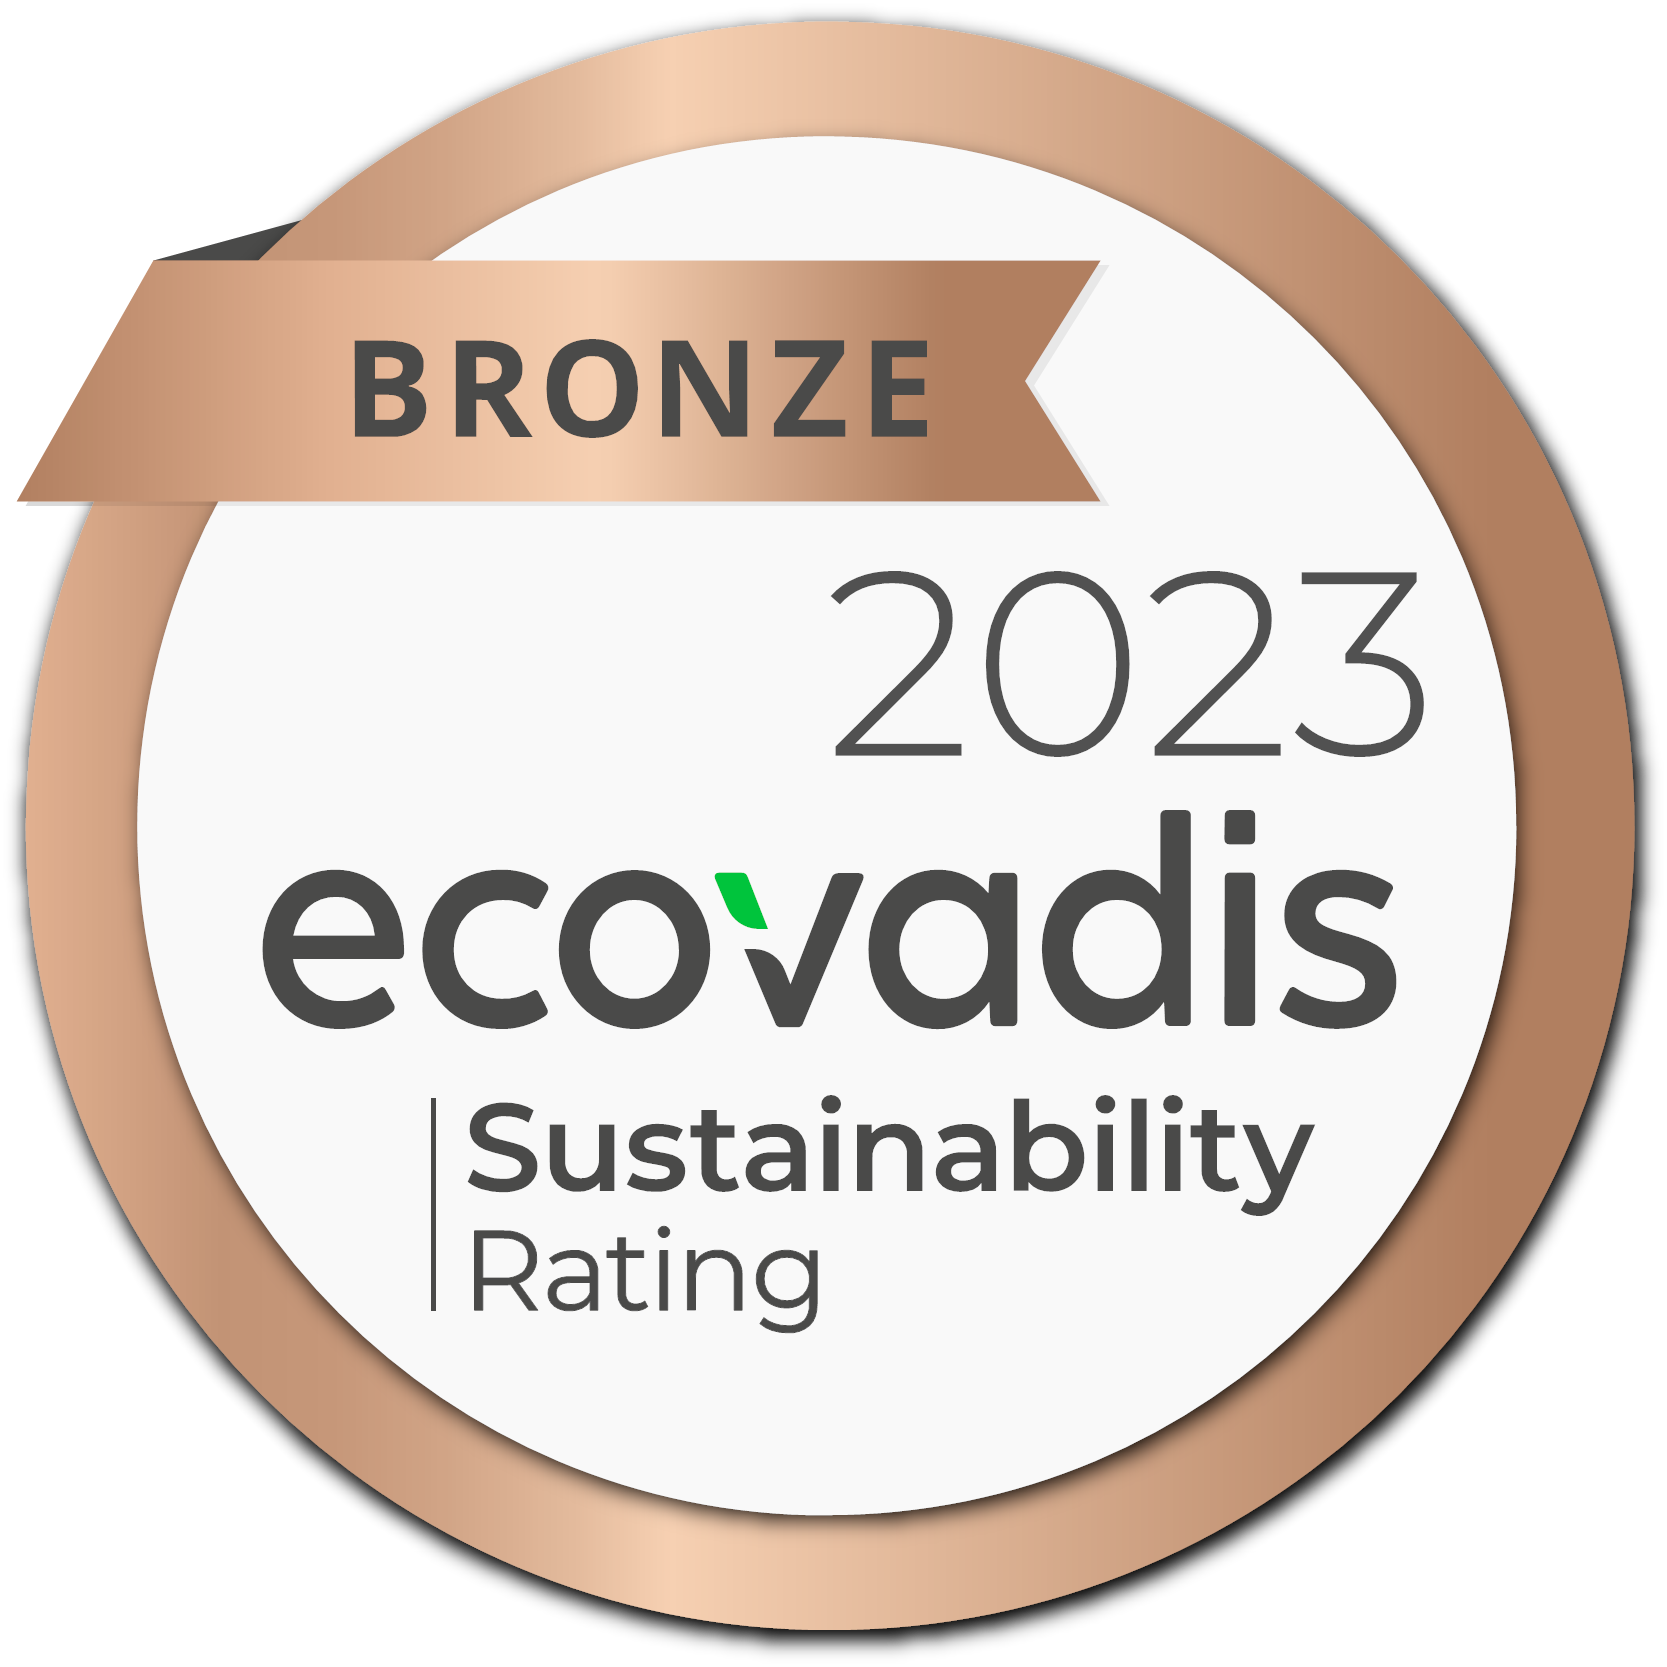 Ecovadis 2023 Bronze Sustainability Rating